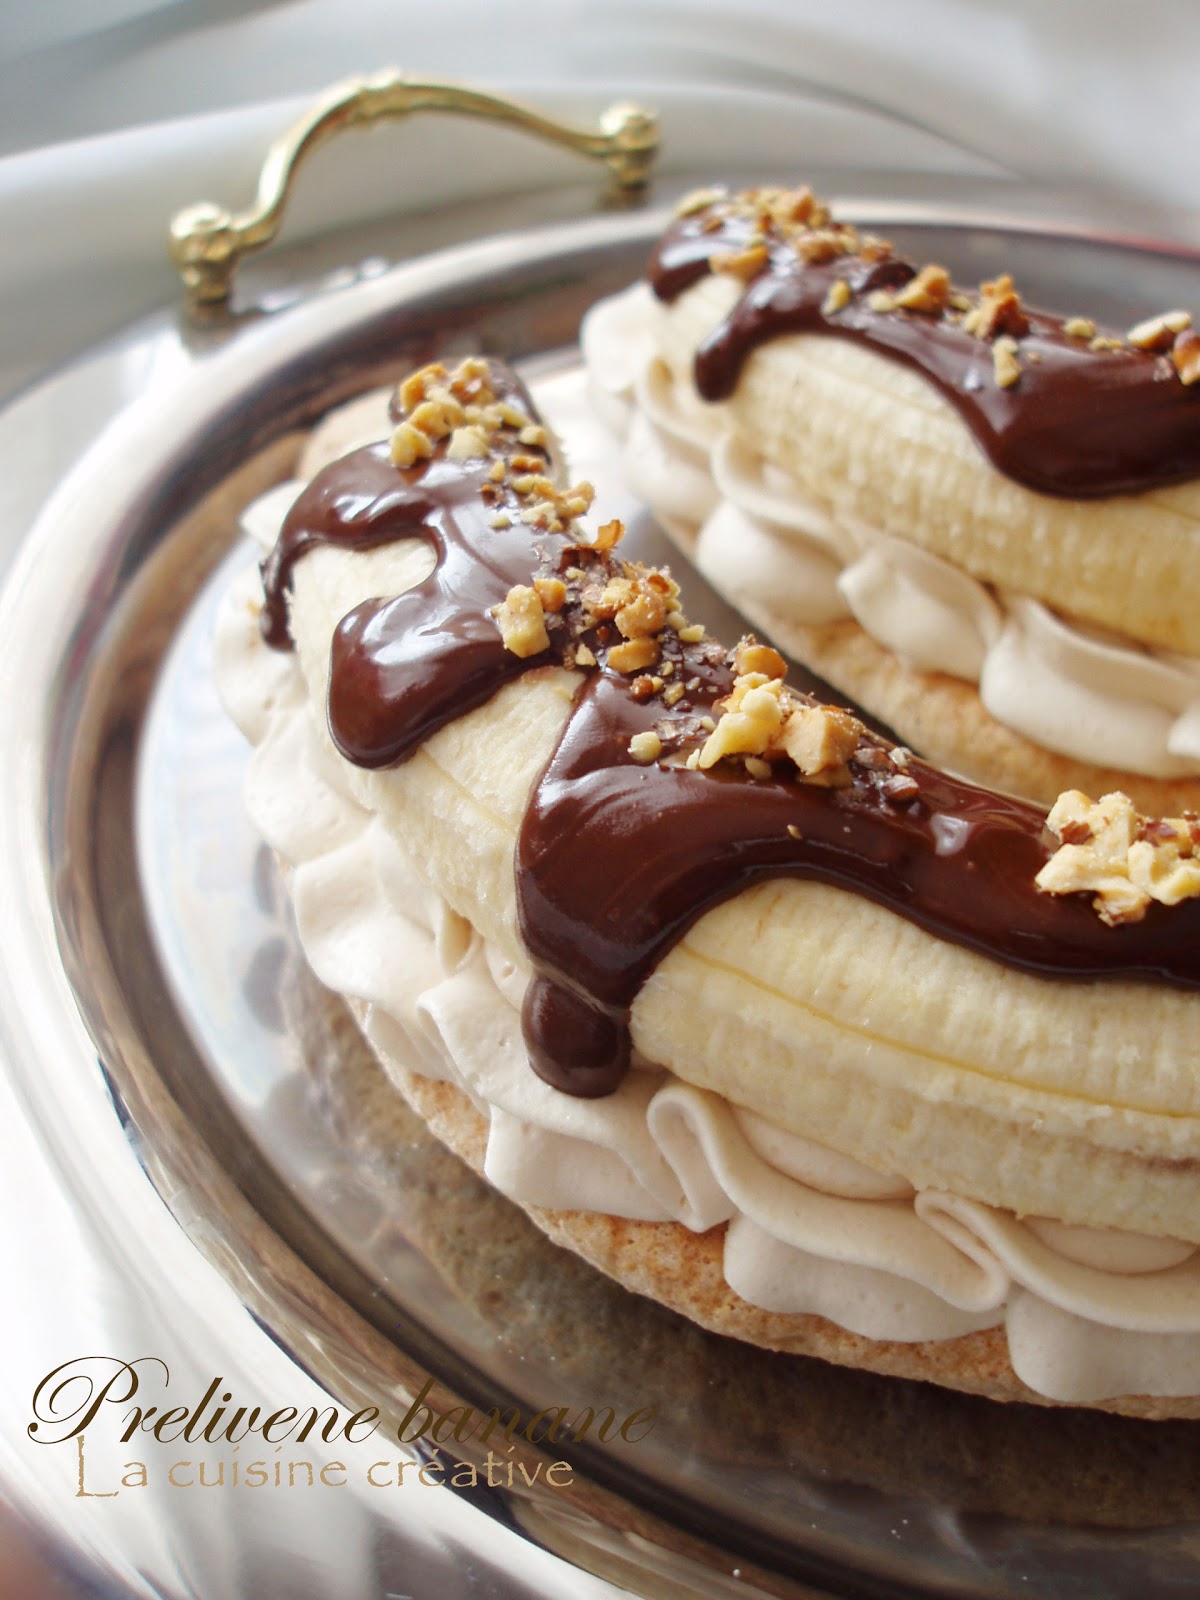 La cuisine creative: Prelivene banane + bonus recept:)